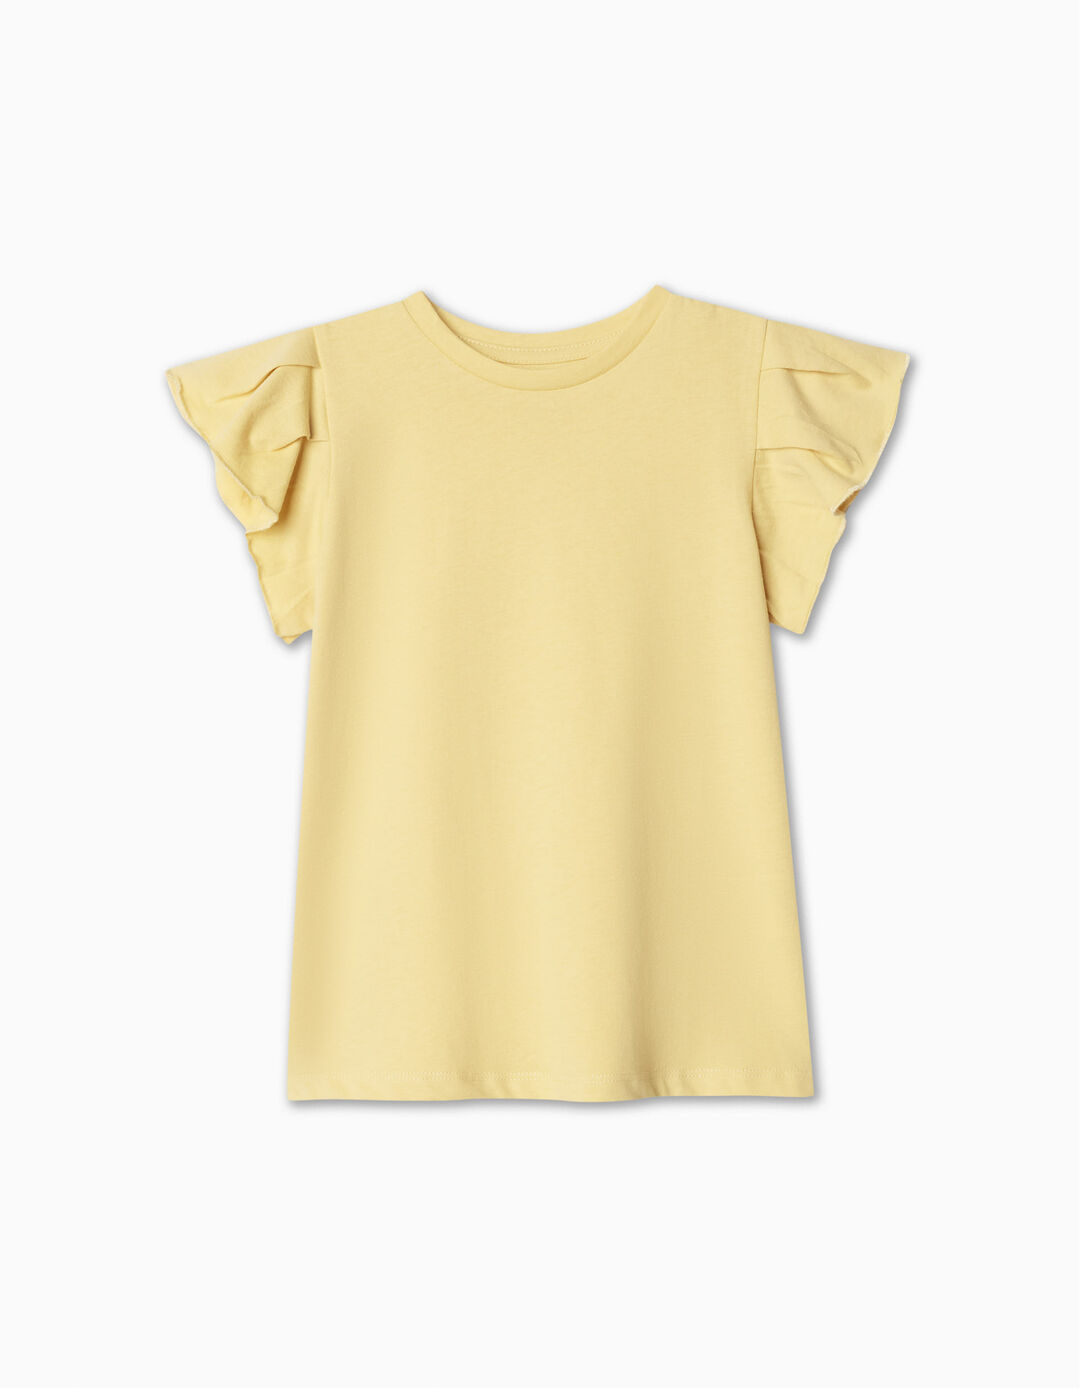 T-shirt Folhos, Menina, Amarelo Claro